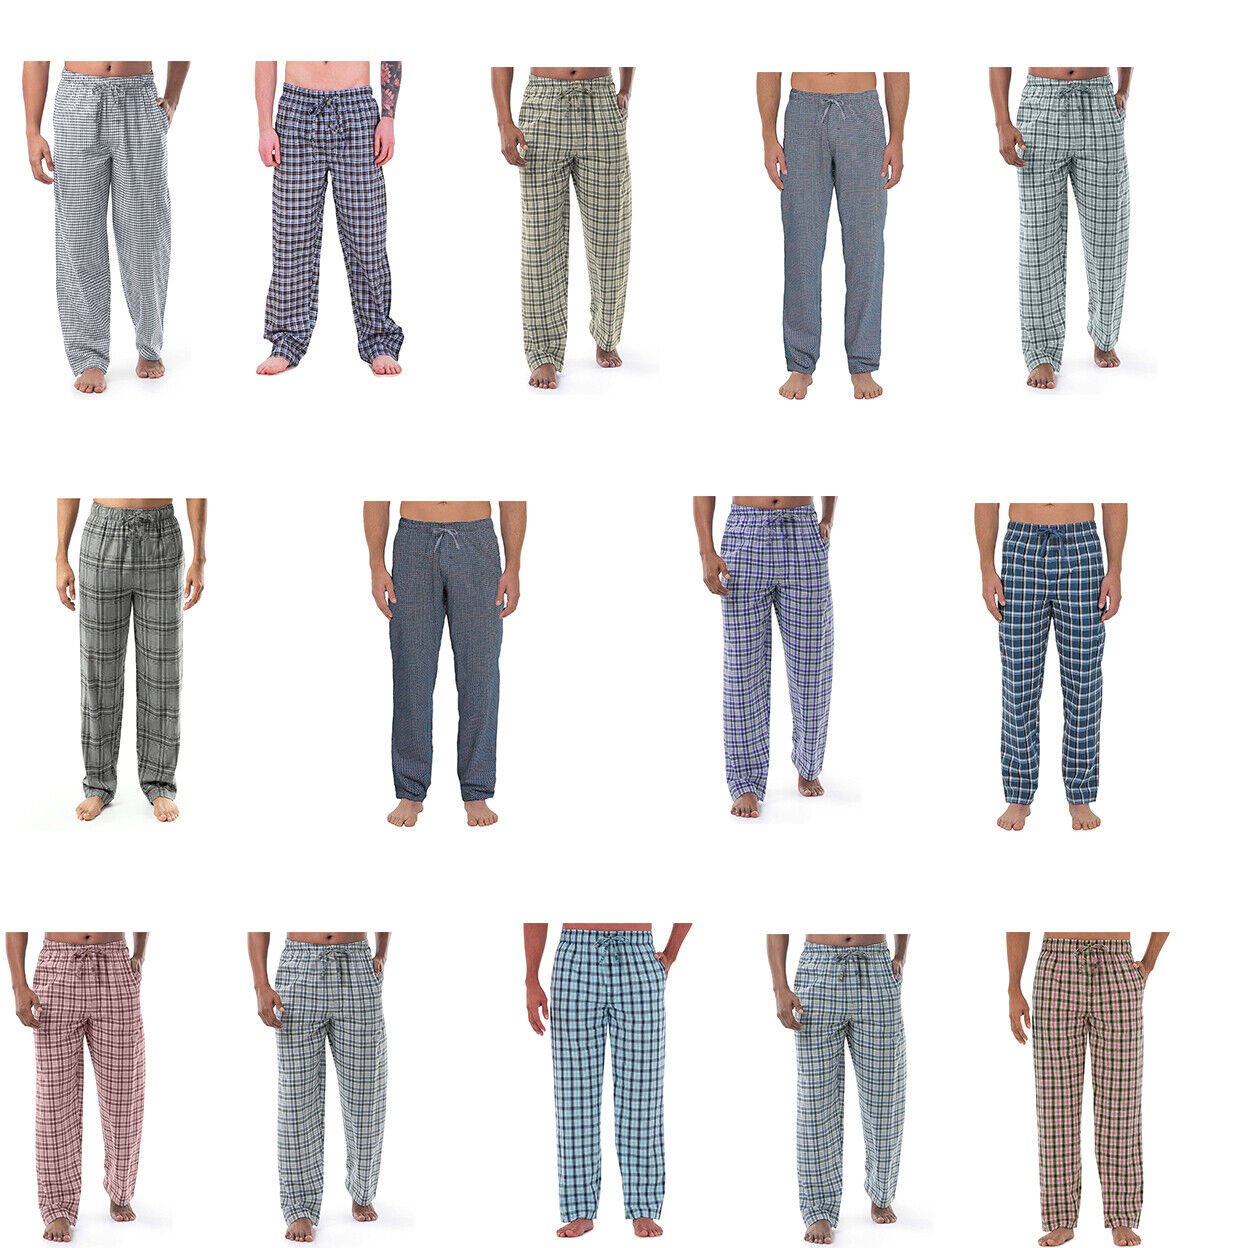 Men's Ultra-Soft Plaid Cotton Jersey Knit Comfy Sleep Lounge Pajama Pants - Beige, Small